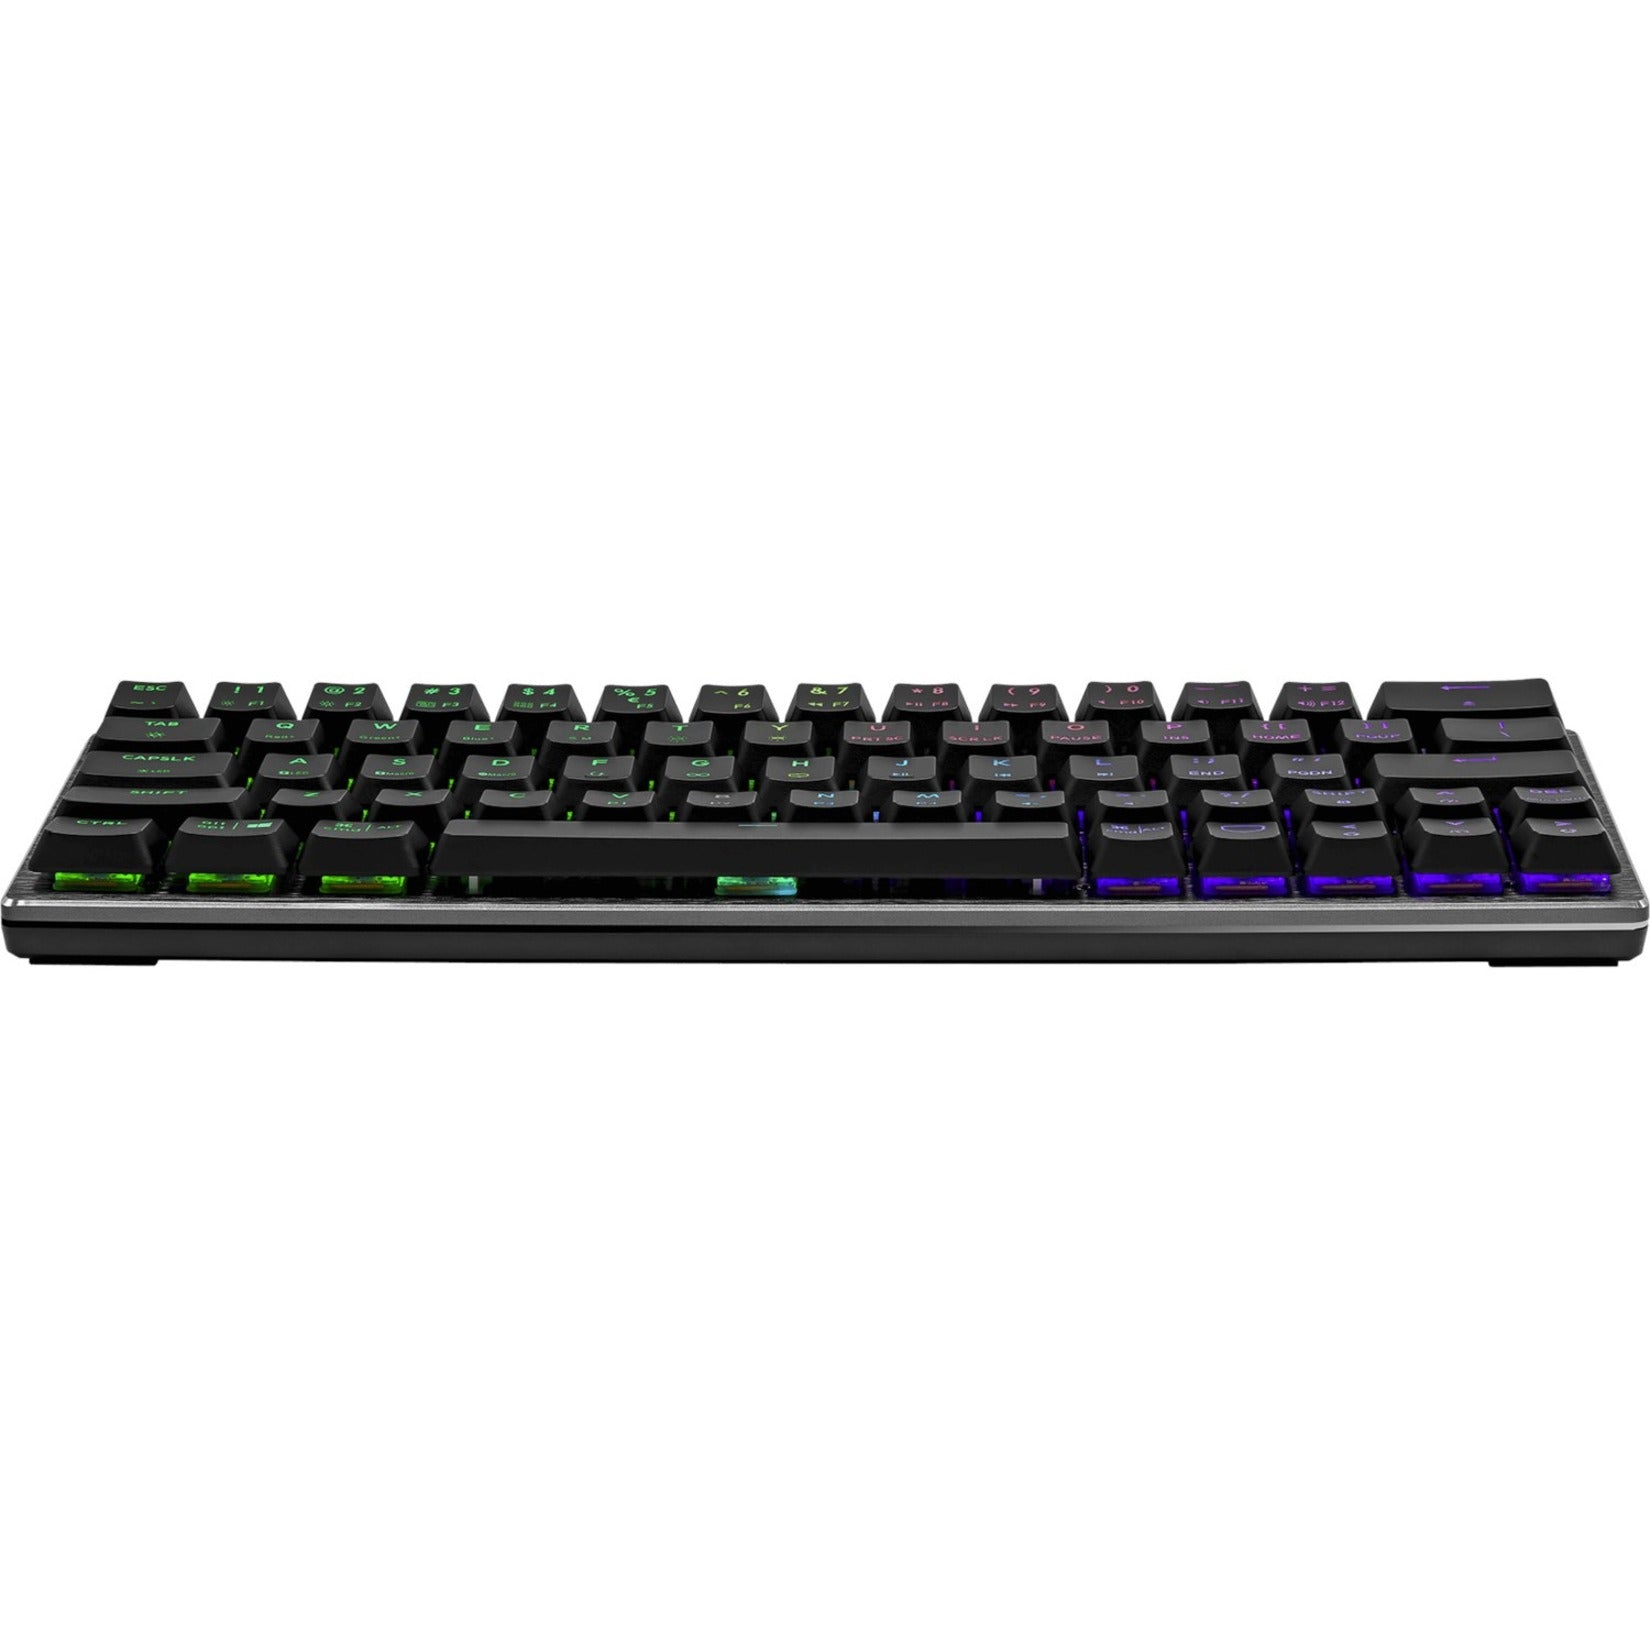 Cooler Master SK-620-GKTL1-US SK620 Keyboard, Mechanical, Ergonomic, RGB Lighting, Space Gray